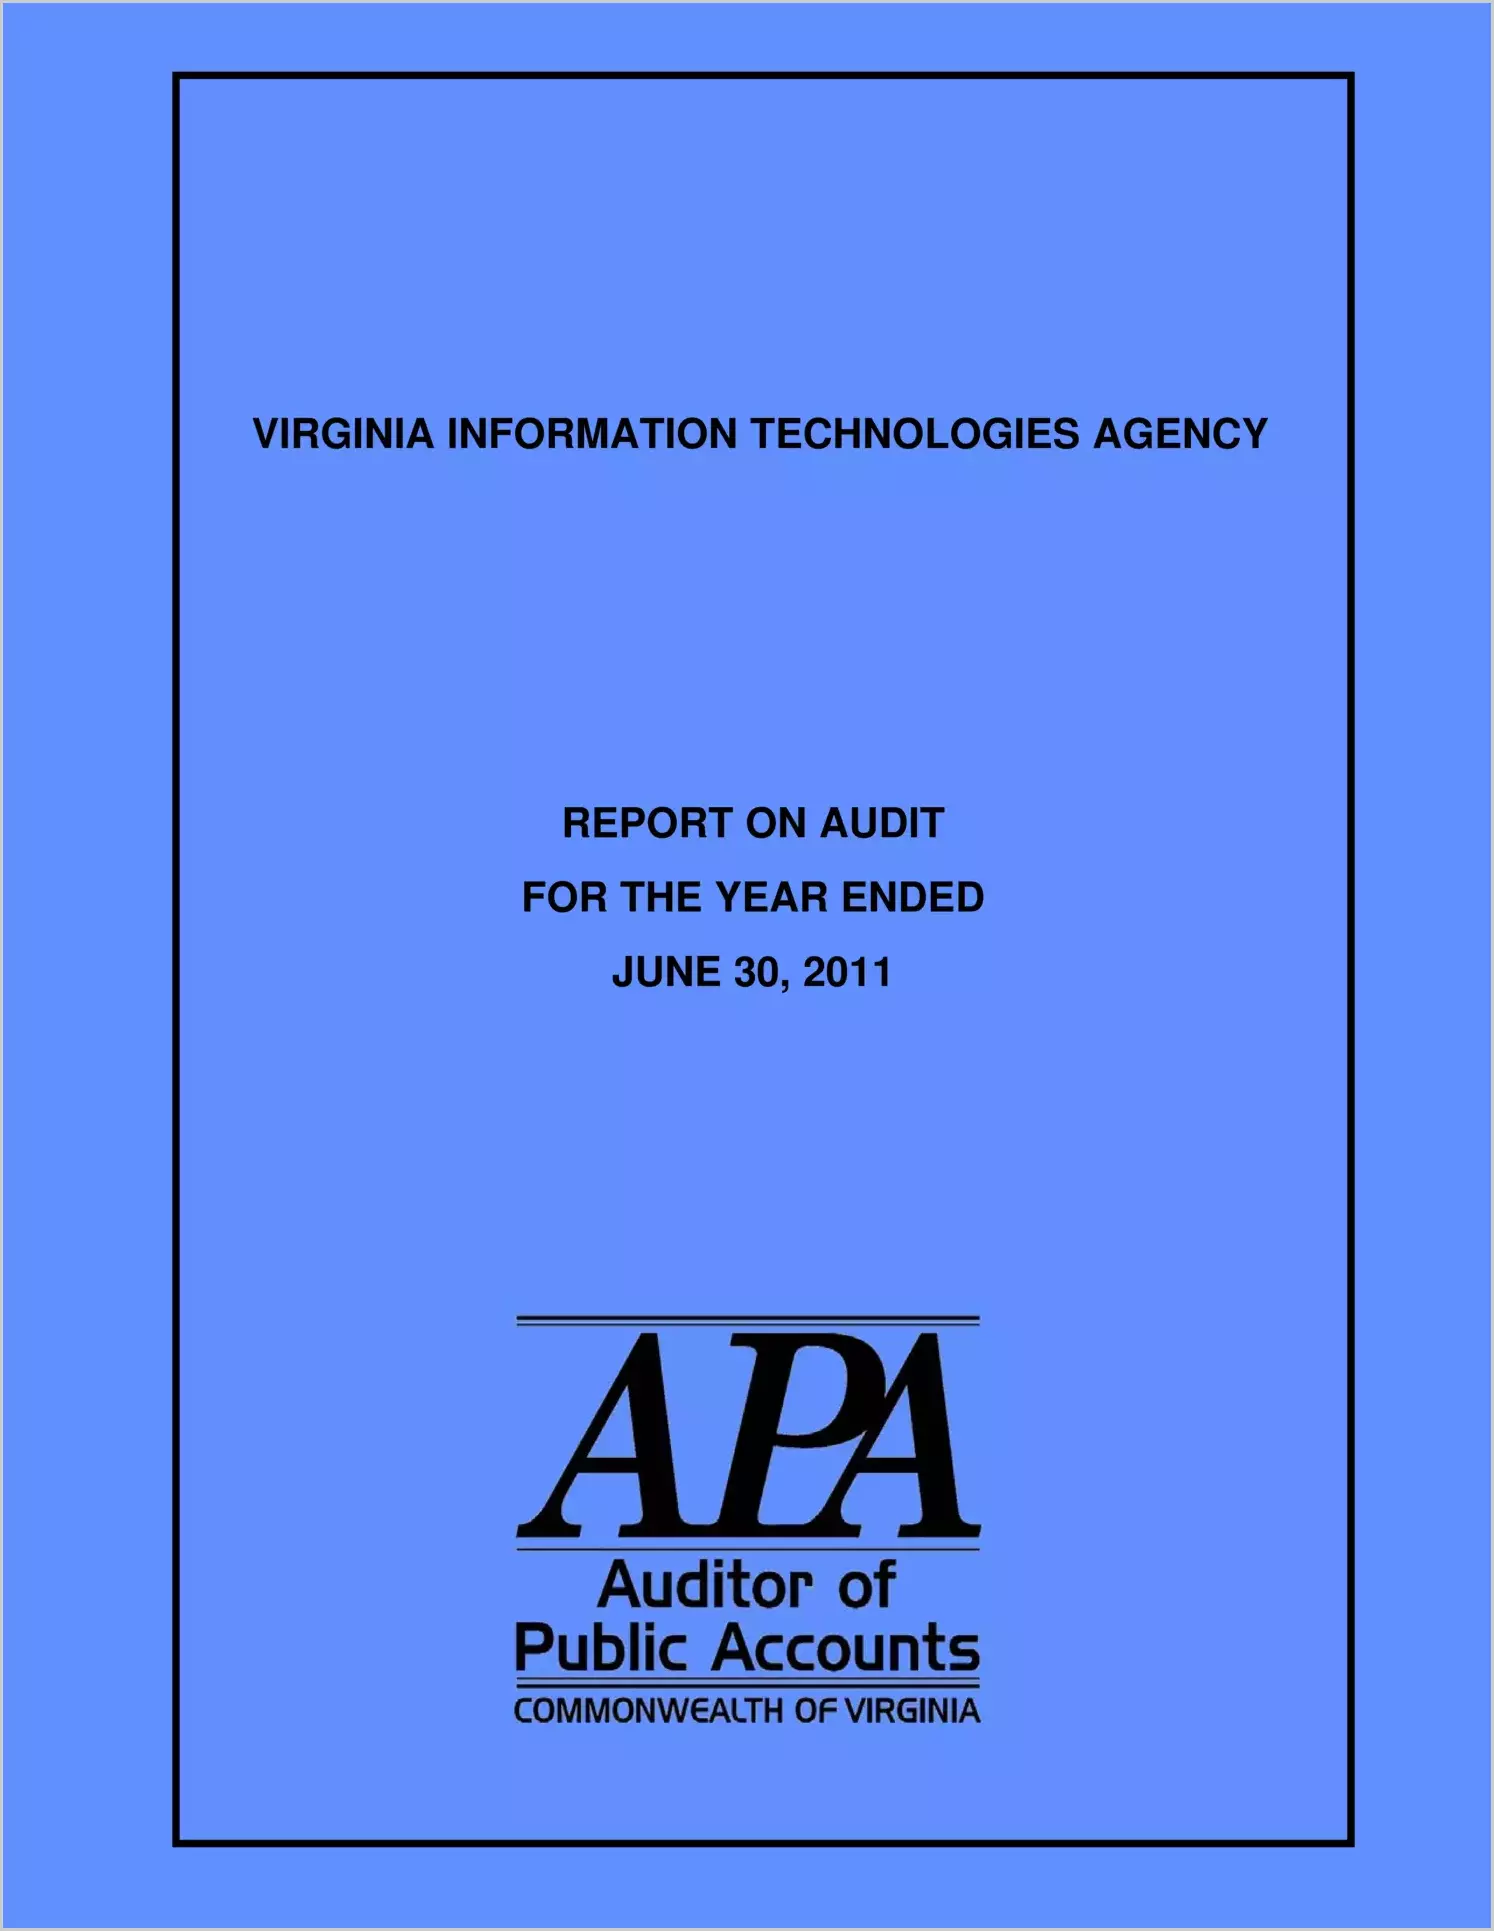 Virginia Information Technologies Agency as June 30, 2011